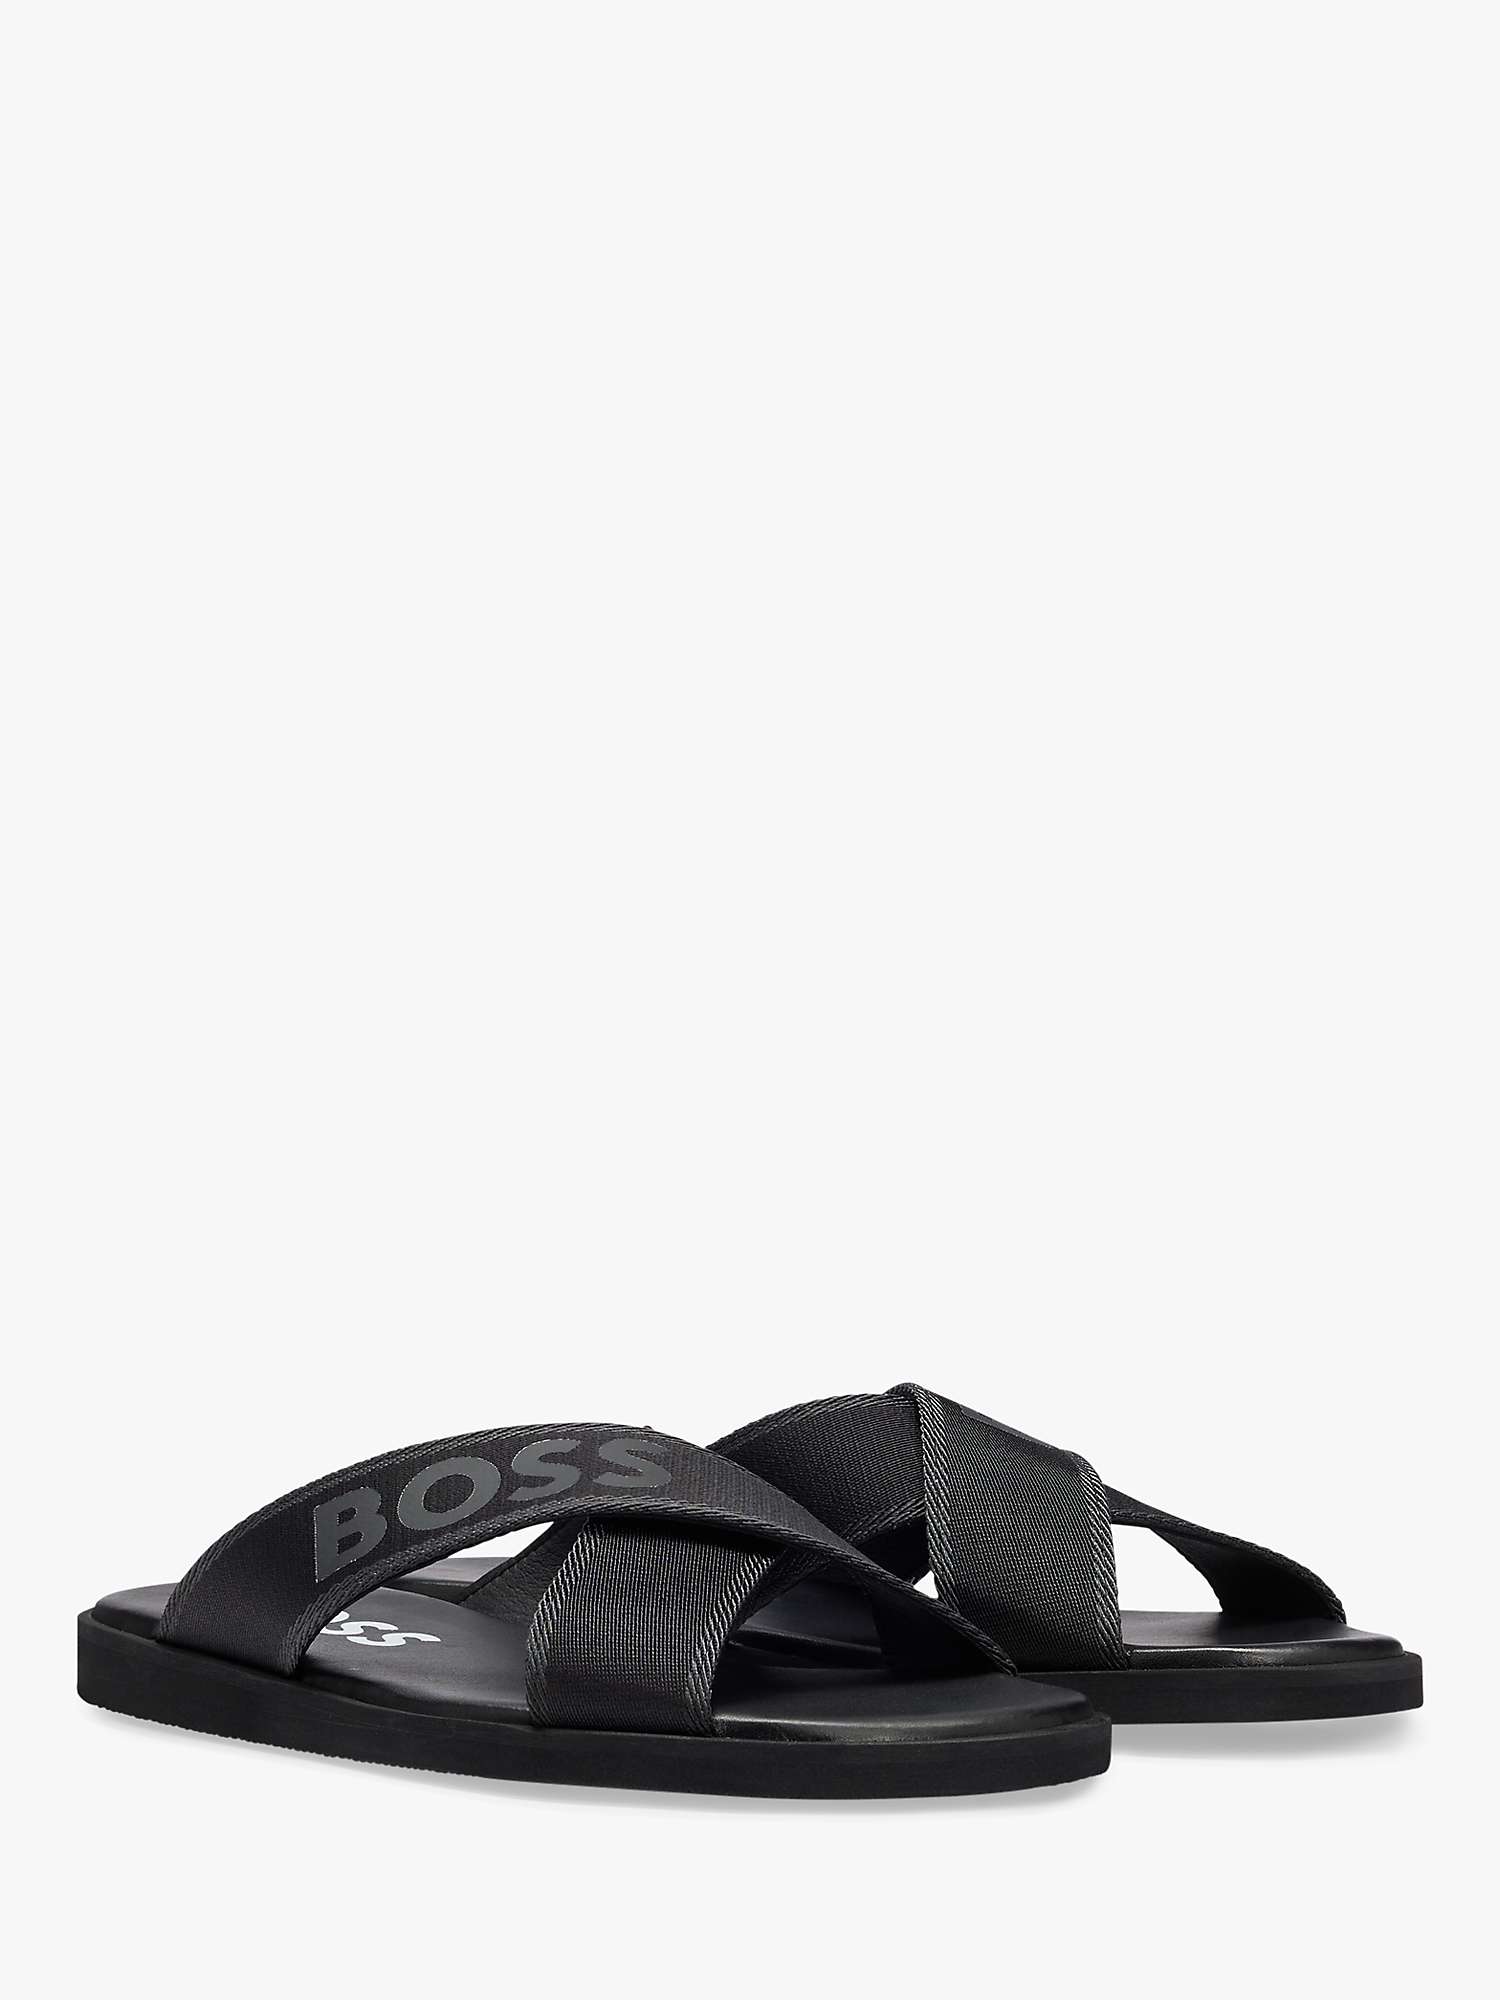 Buy BOSS Darrel Open Toe Slip-On Sandals, Black Online at johnlewis.com